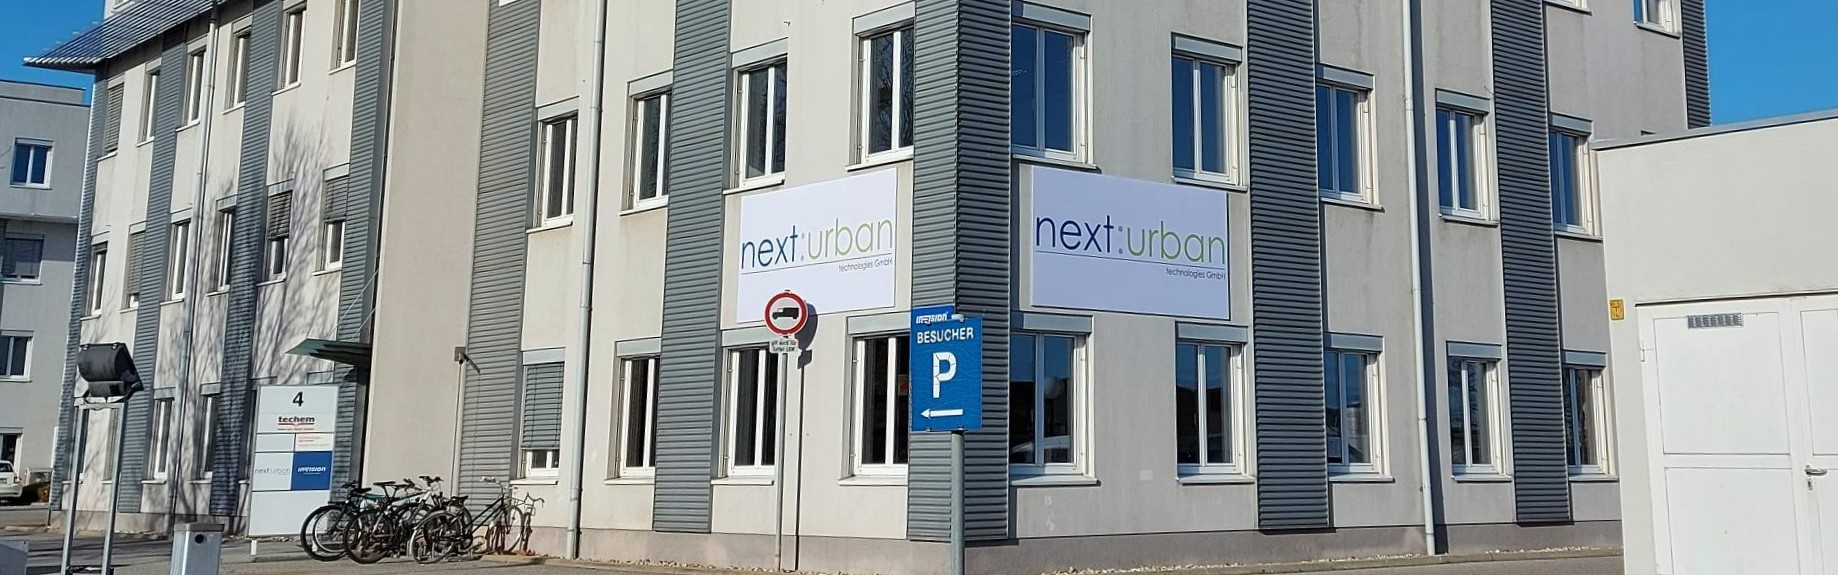 next:urban technologies GmbH